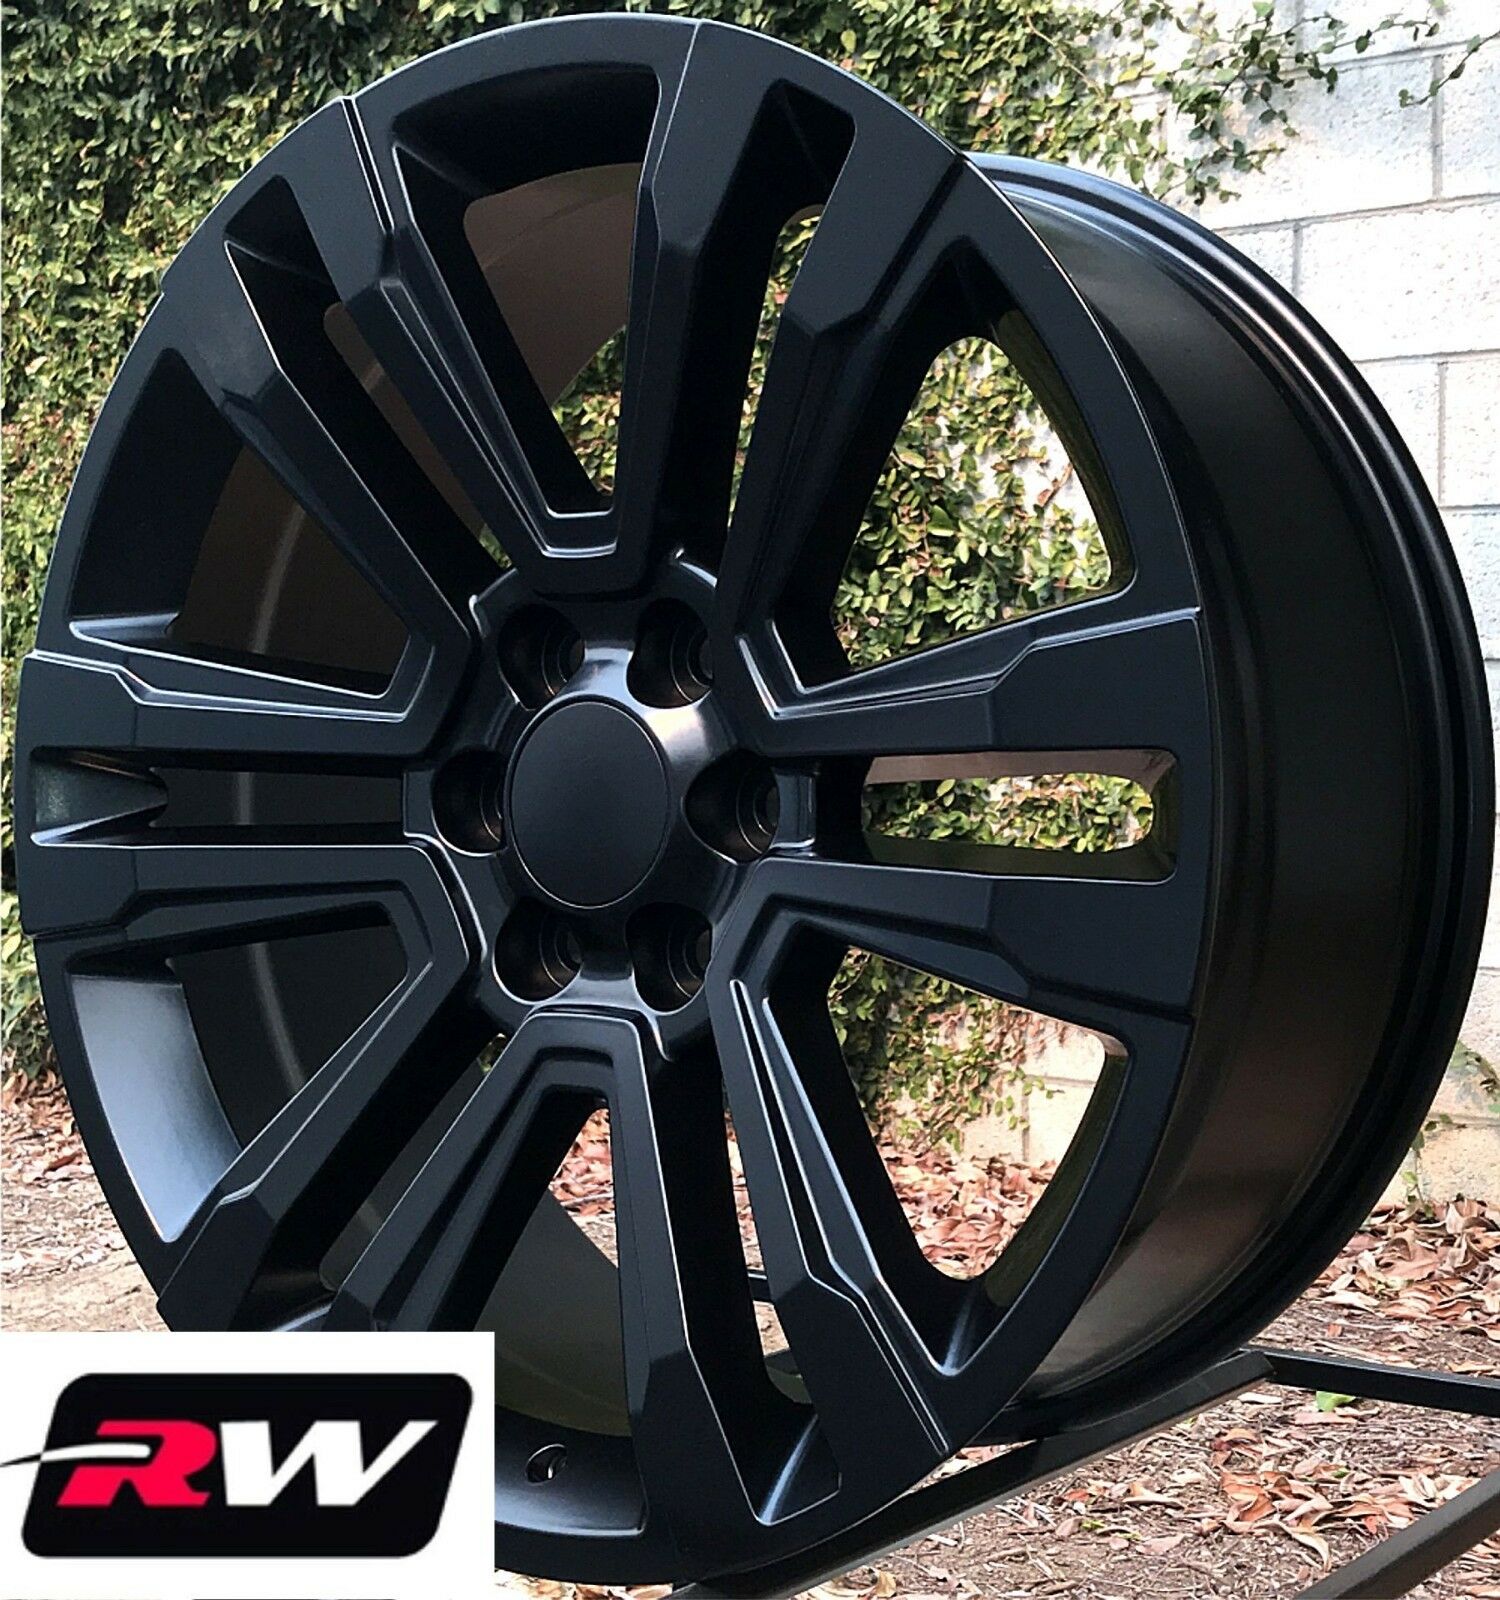 22 inch GMC Yukon Denali 2018 Style Wheels Satin Black Rims Tires fit Suburban